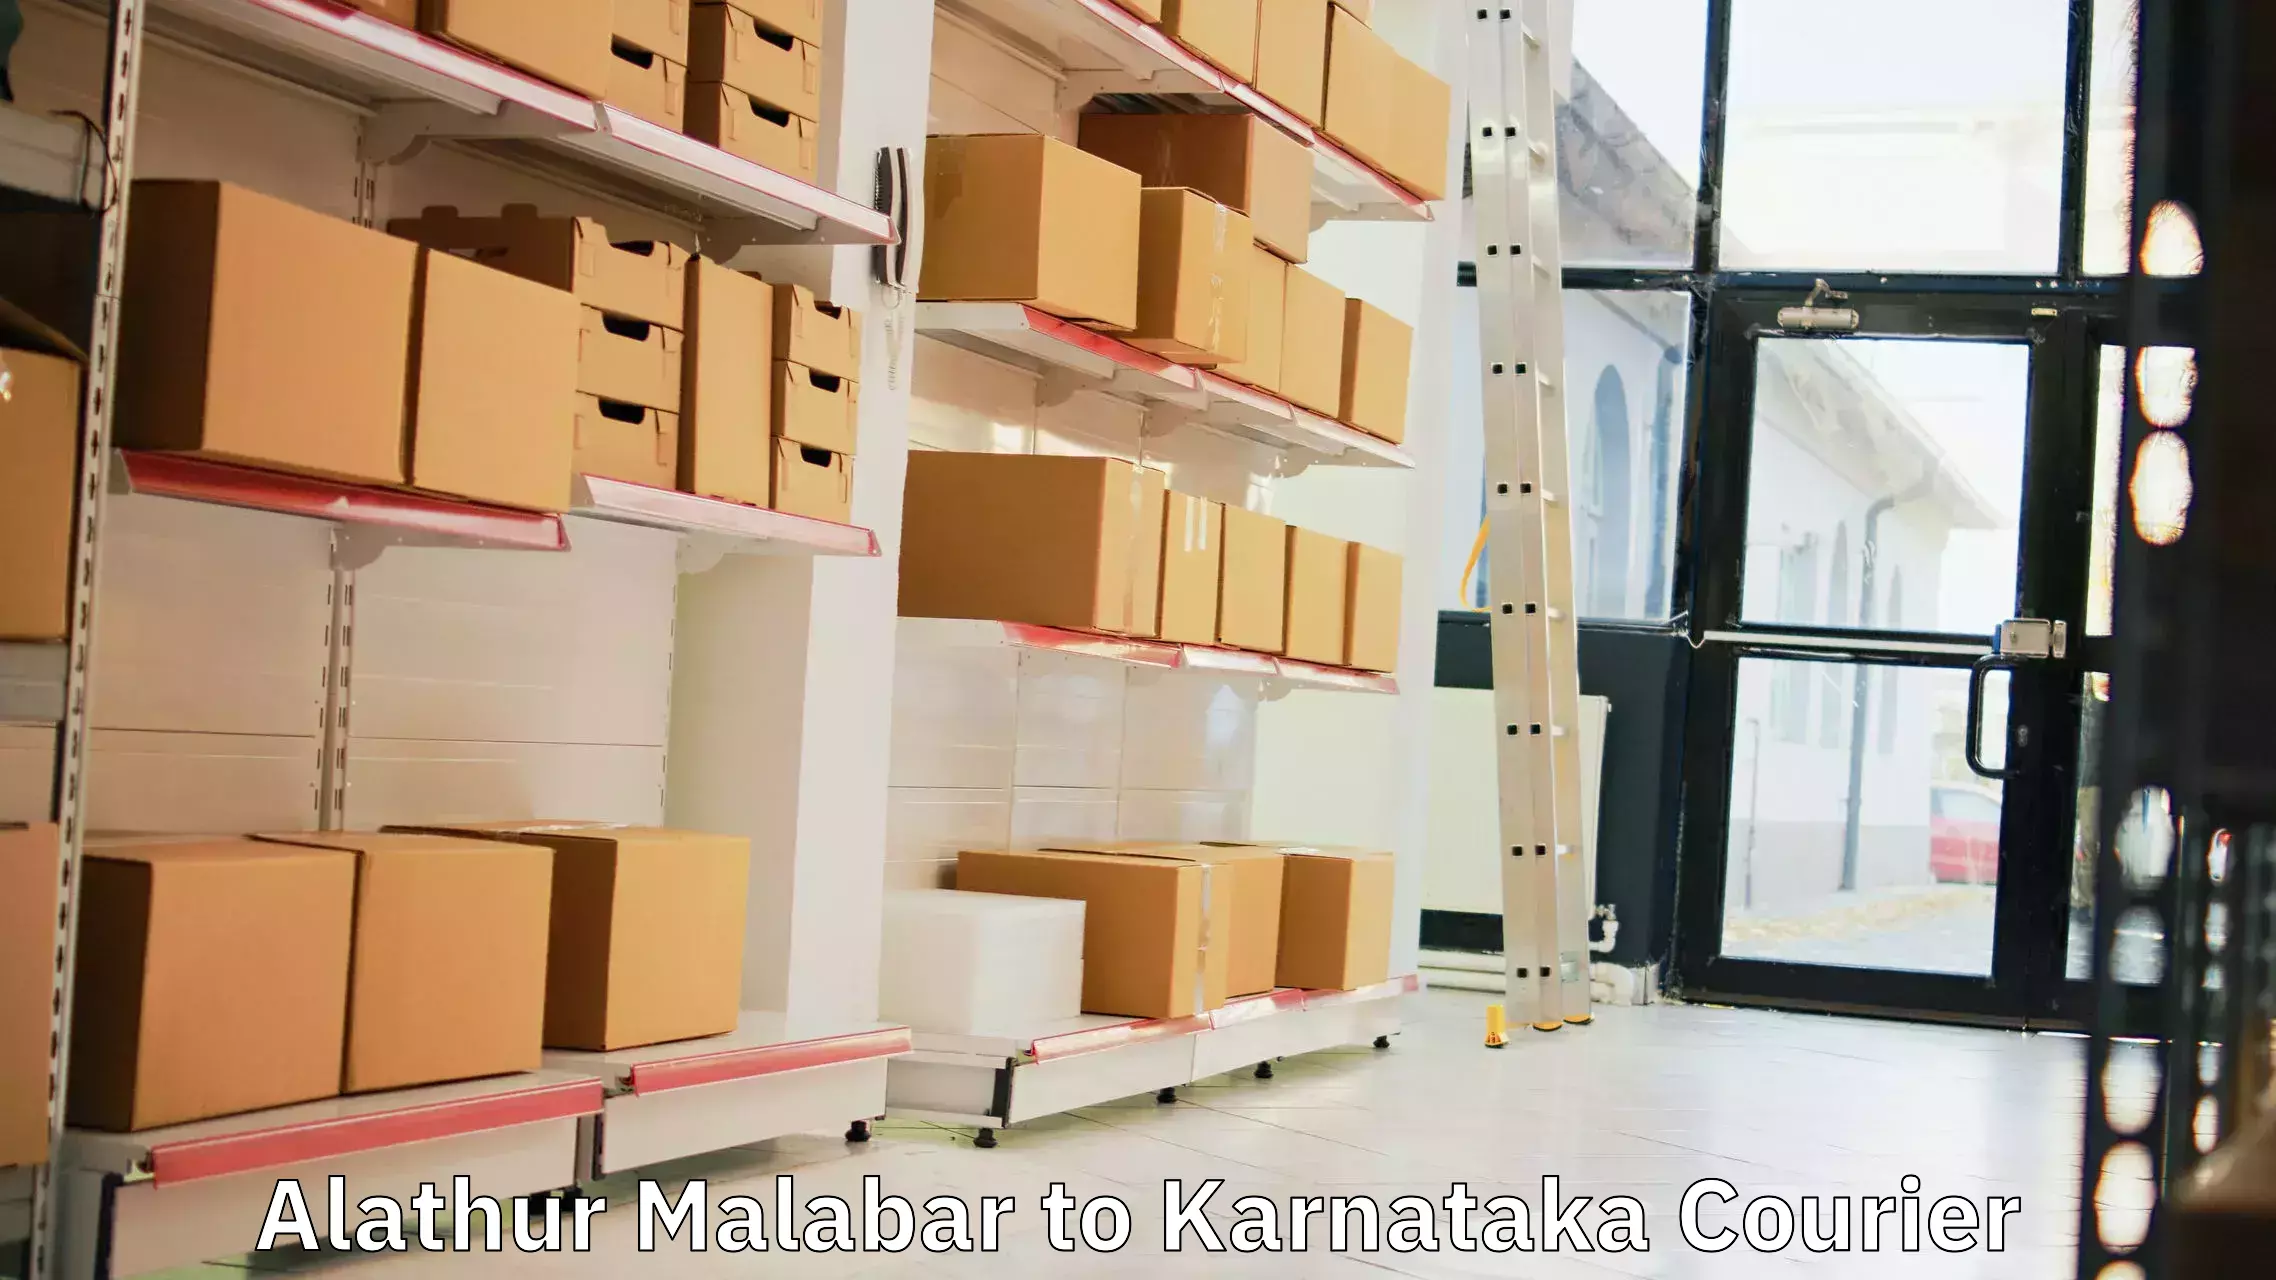 Express logistics providers Alathur Malabar to Karnataka